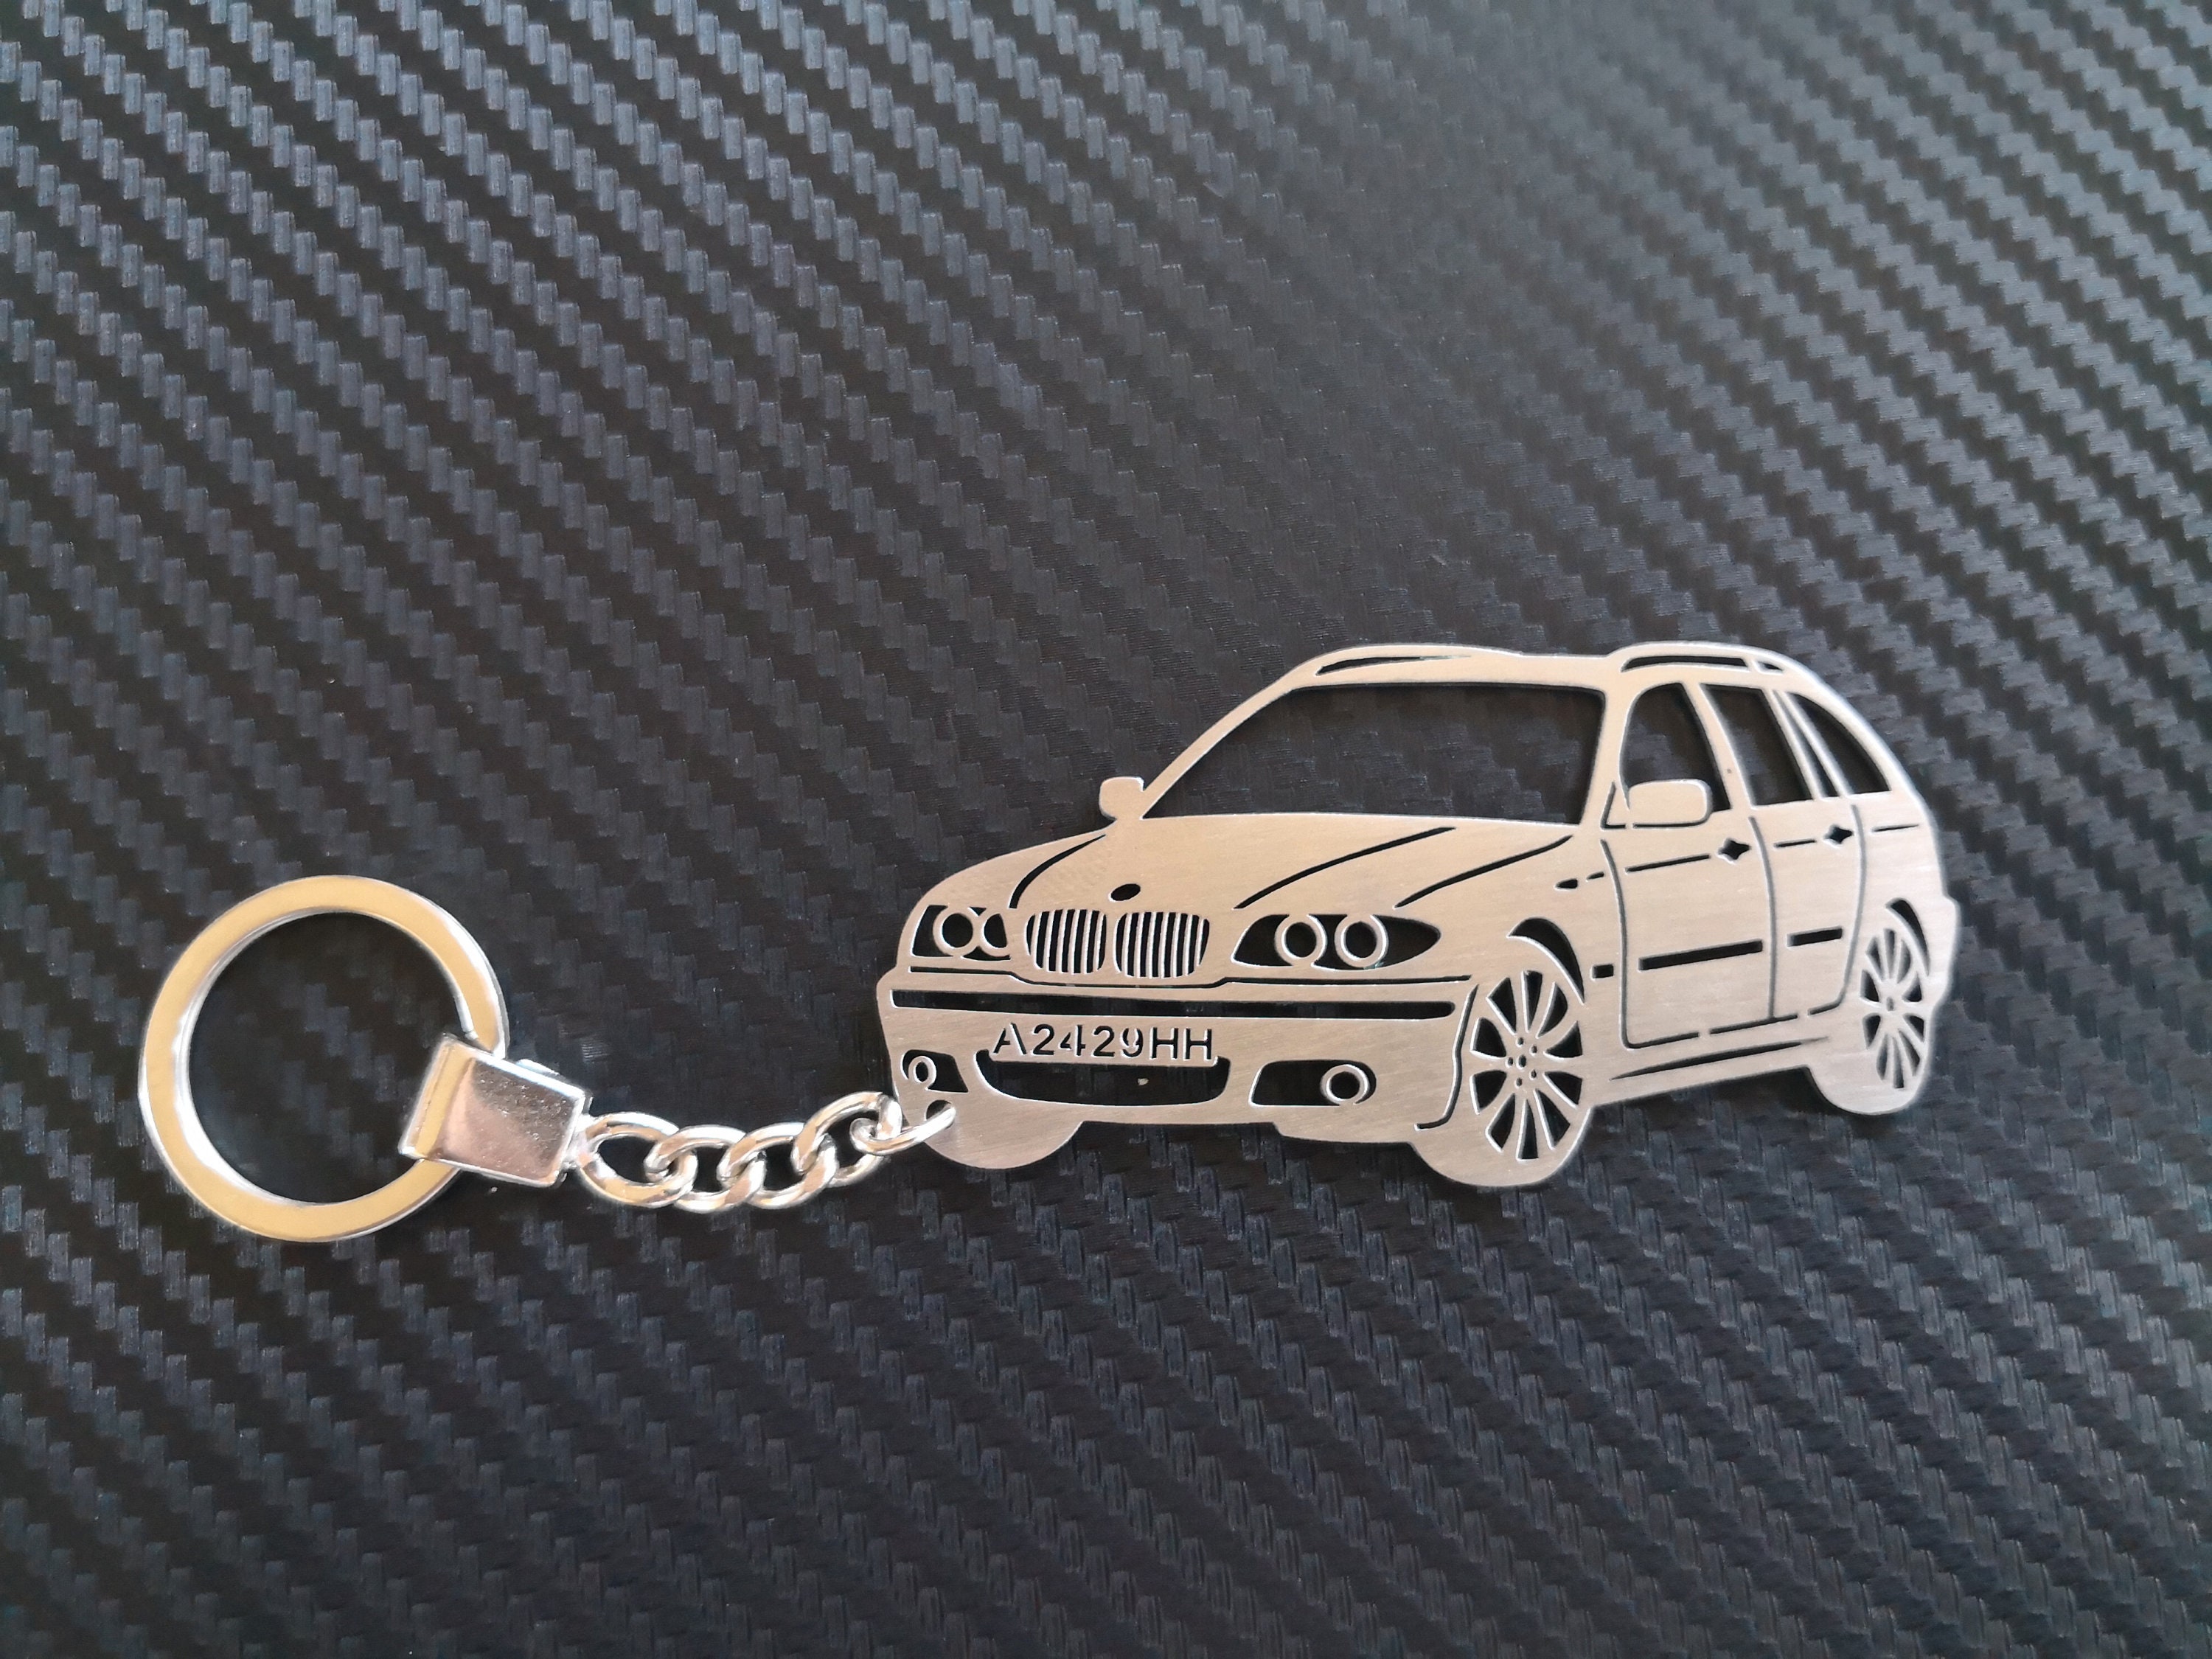 BMW E46 KEYCHAIN Keyring Chain Fob Keyfob M3 328i 325i 323i 320i 318i 316  Cabrio £7.41 - PicClick UK